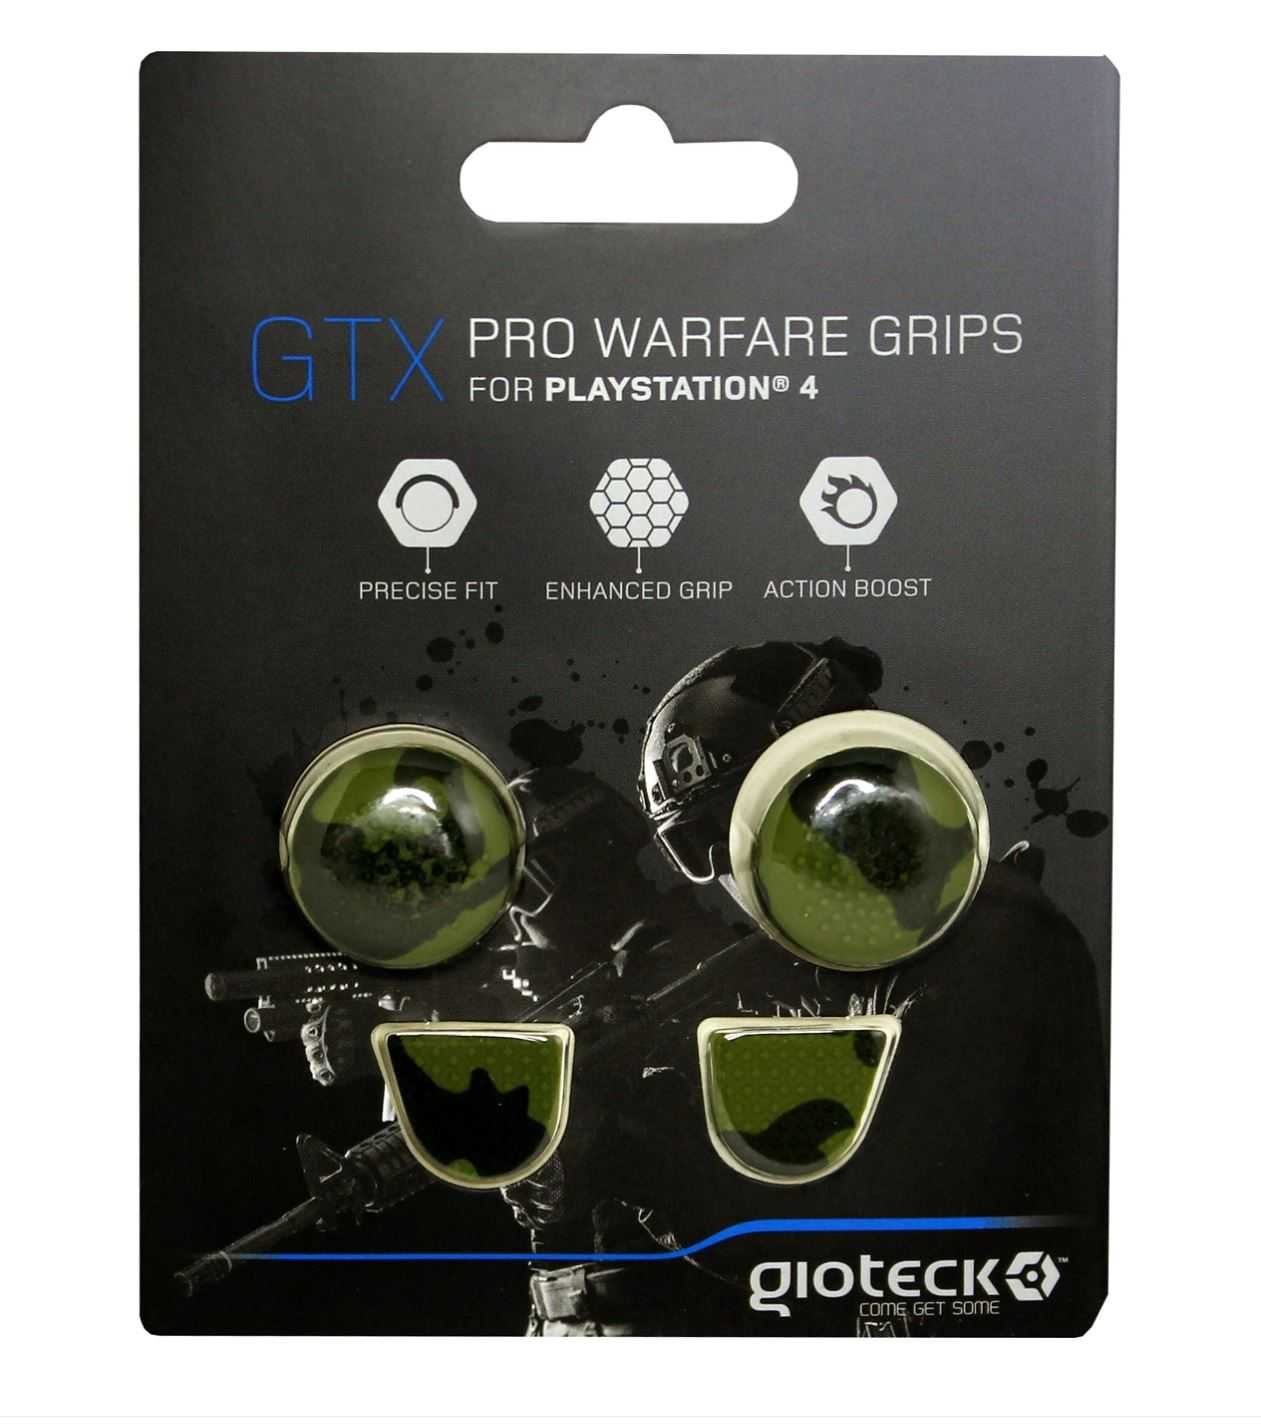 GIOTECK THUMB GRIPS GTX PRO WARFARE GRIPS za PS4 - maskirno zelene barve